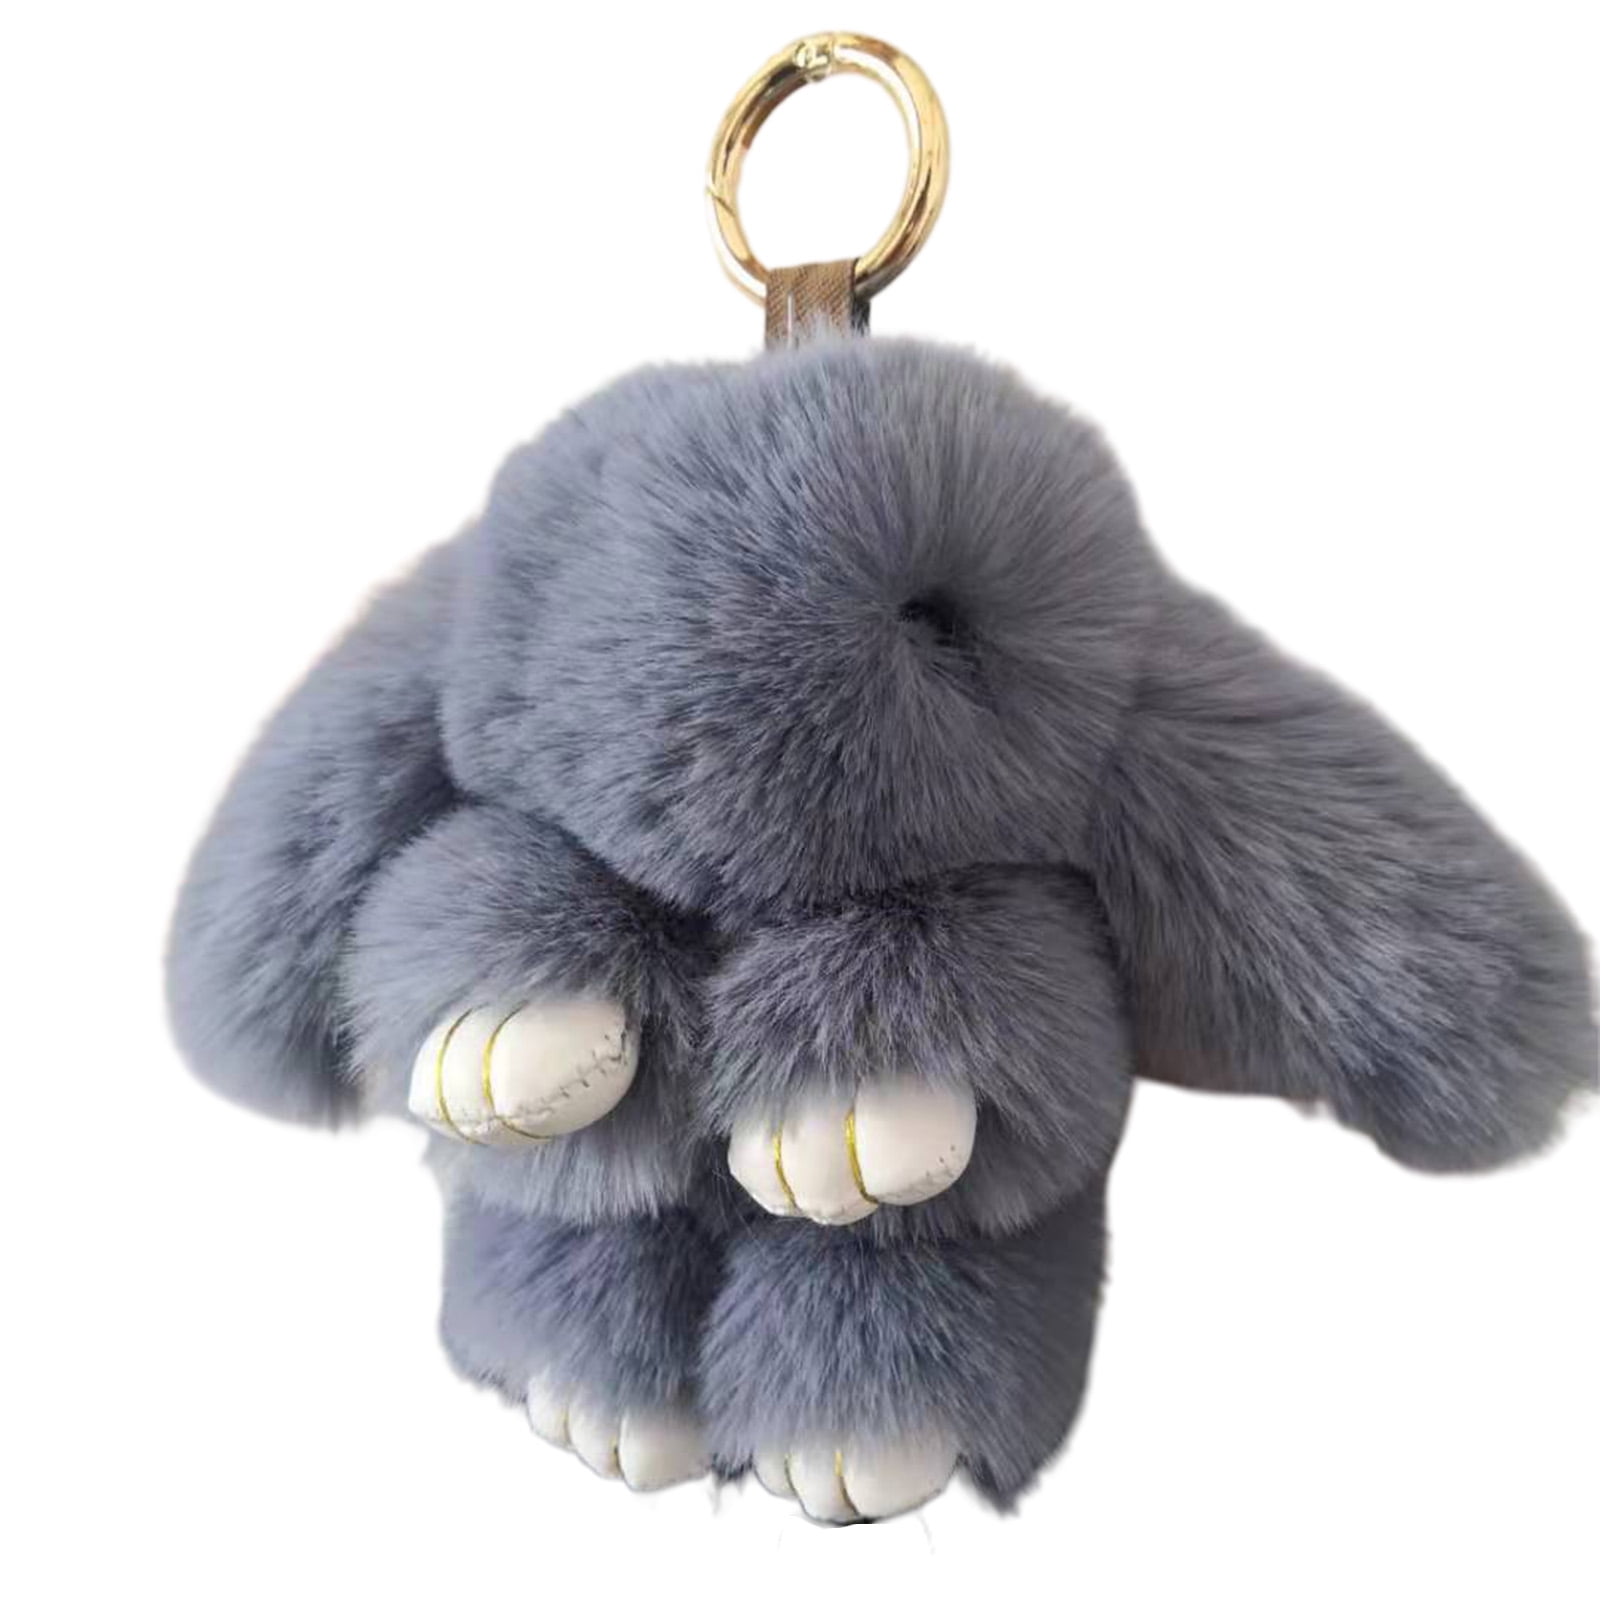 16cm Bunny Keychain Fashion Lovely Plush Toy Plush Rabbit Pendant